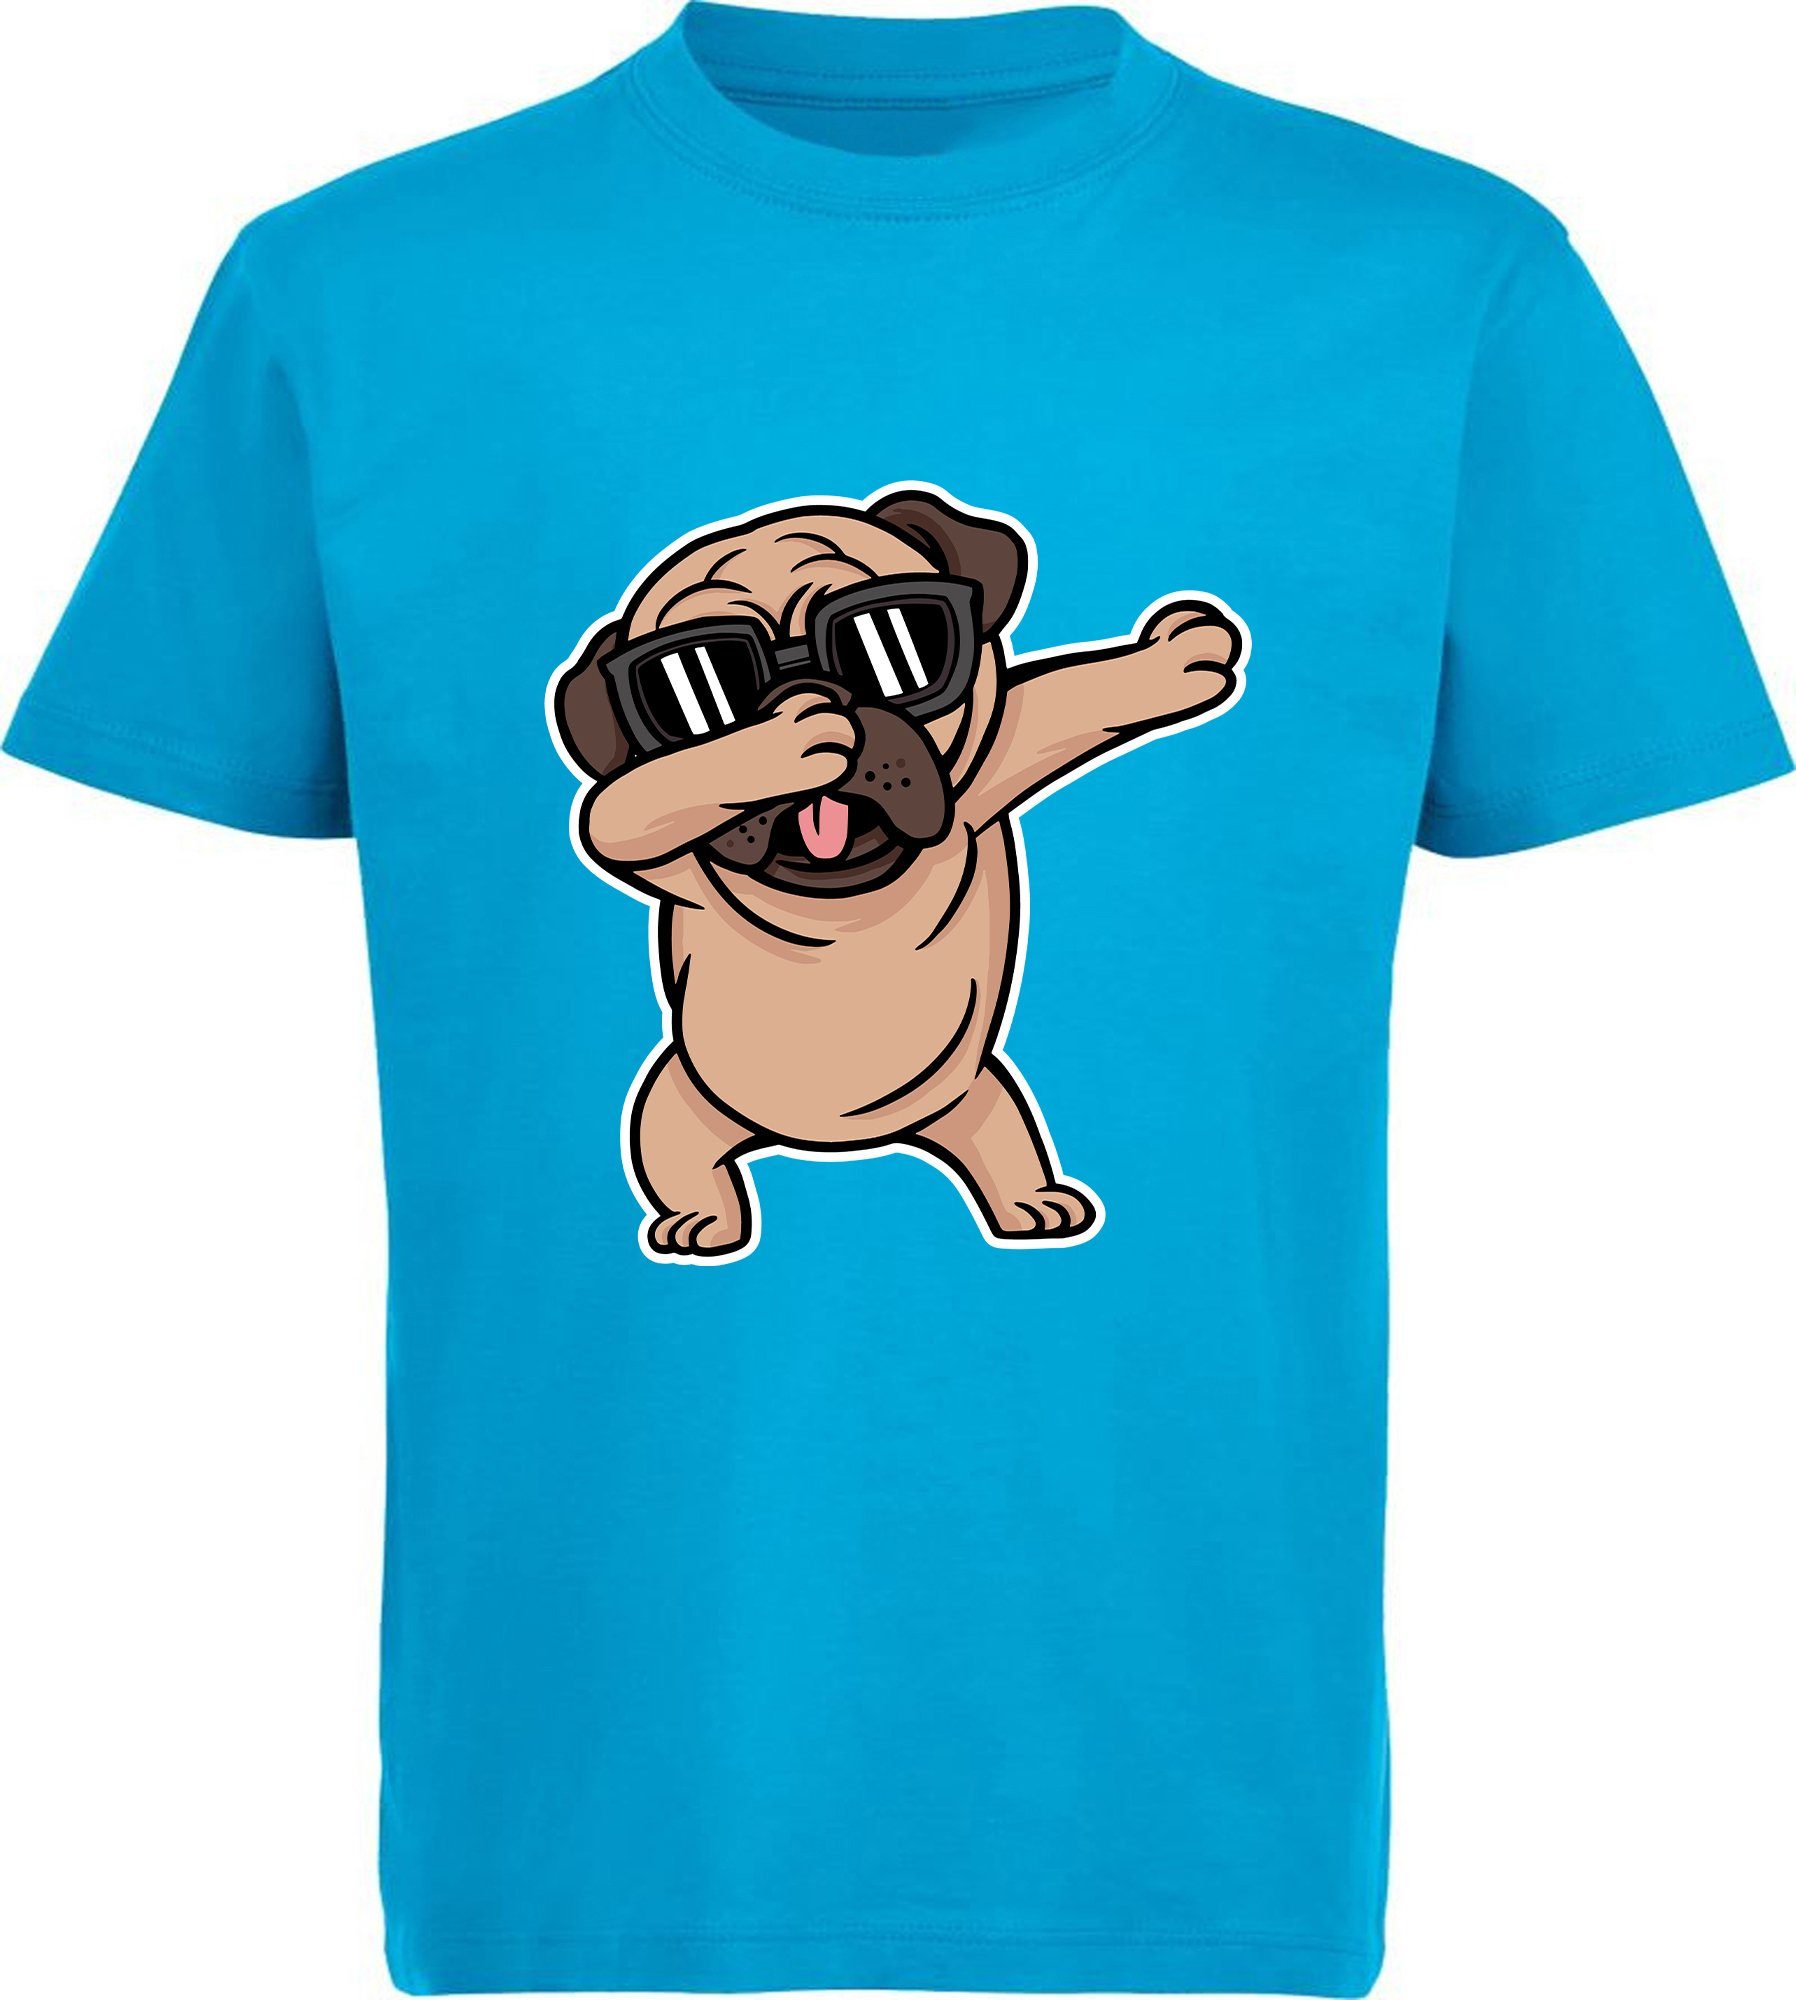 MyDesign24 Print-Shirt Kinder Hunde T-Shirt bedruckt - dab tanzender Hund Baumwollshirt mit Aufdruck, i238 aqua blau